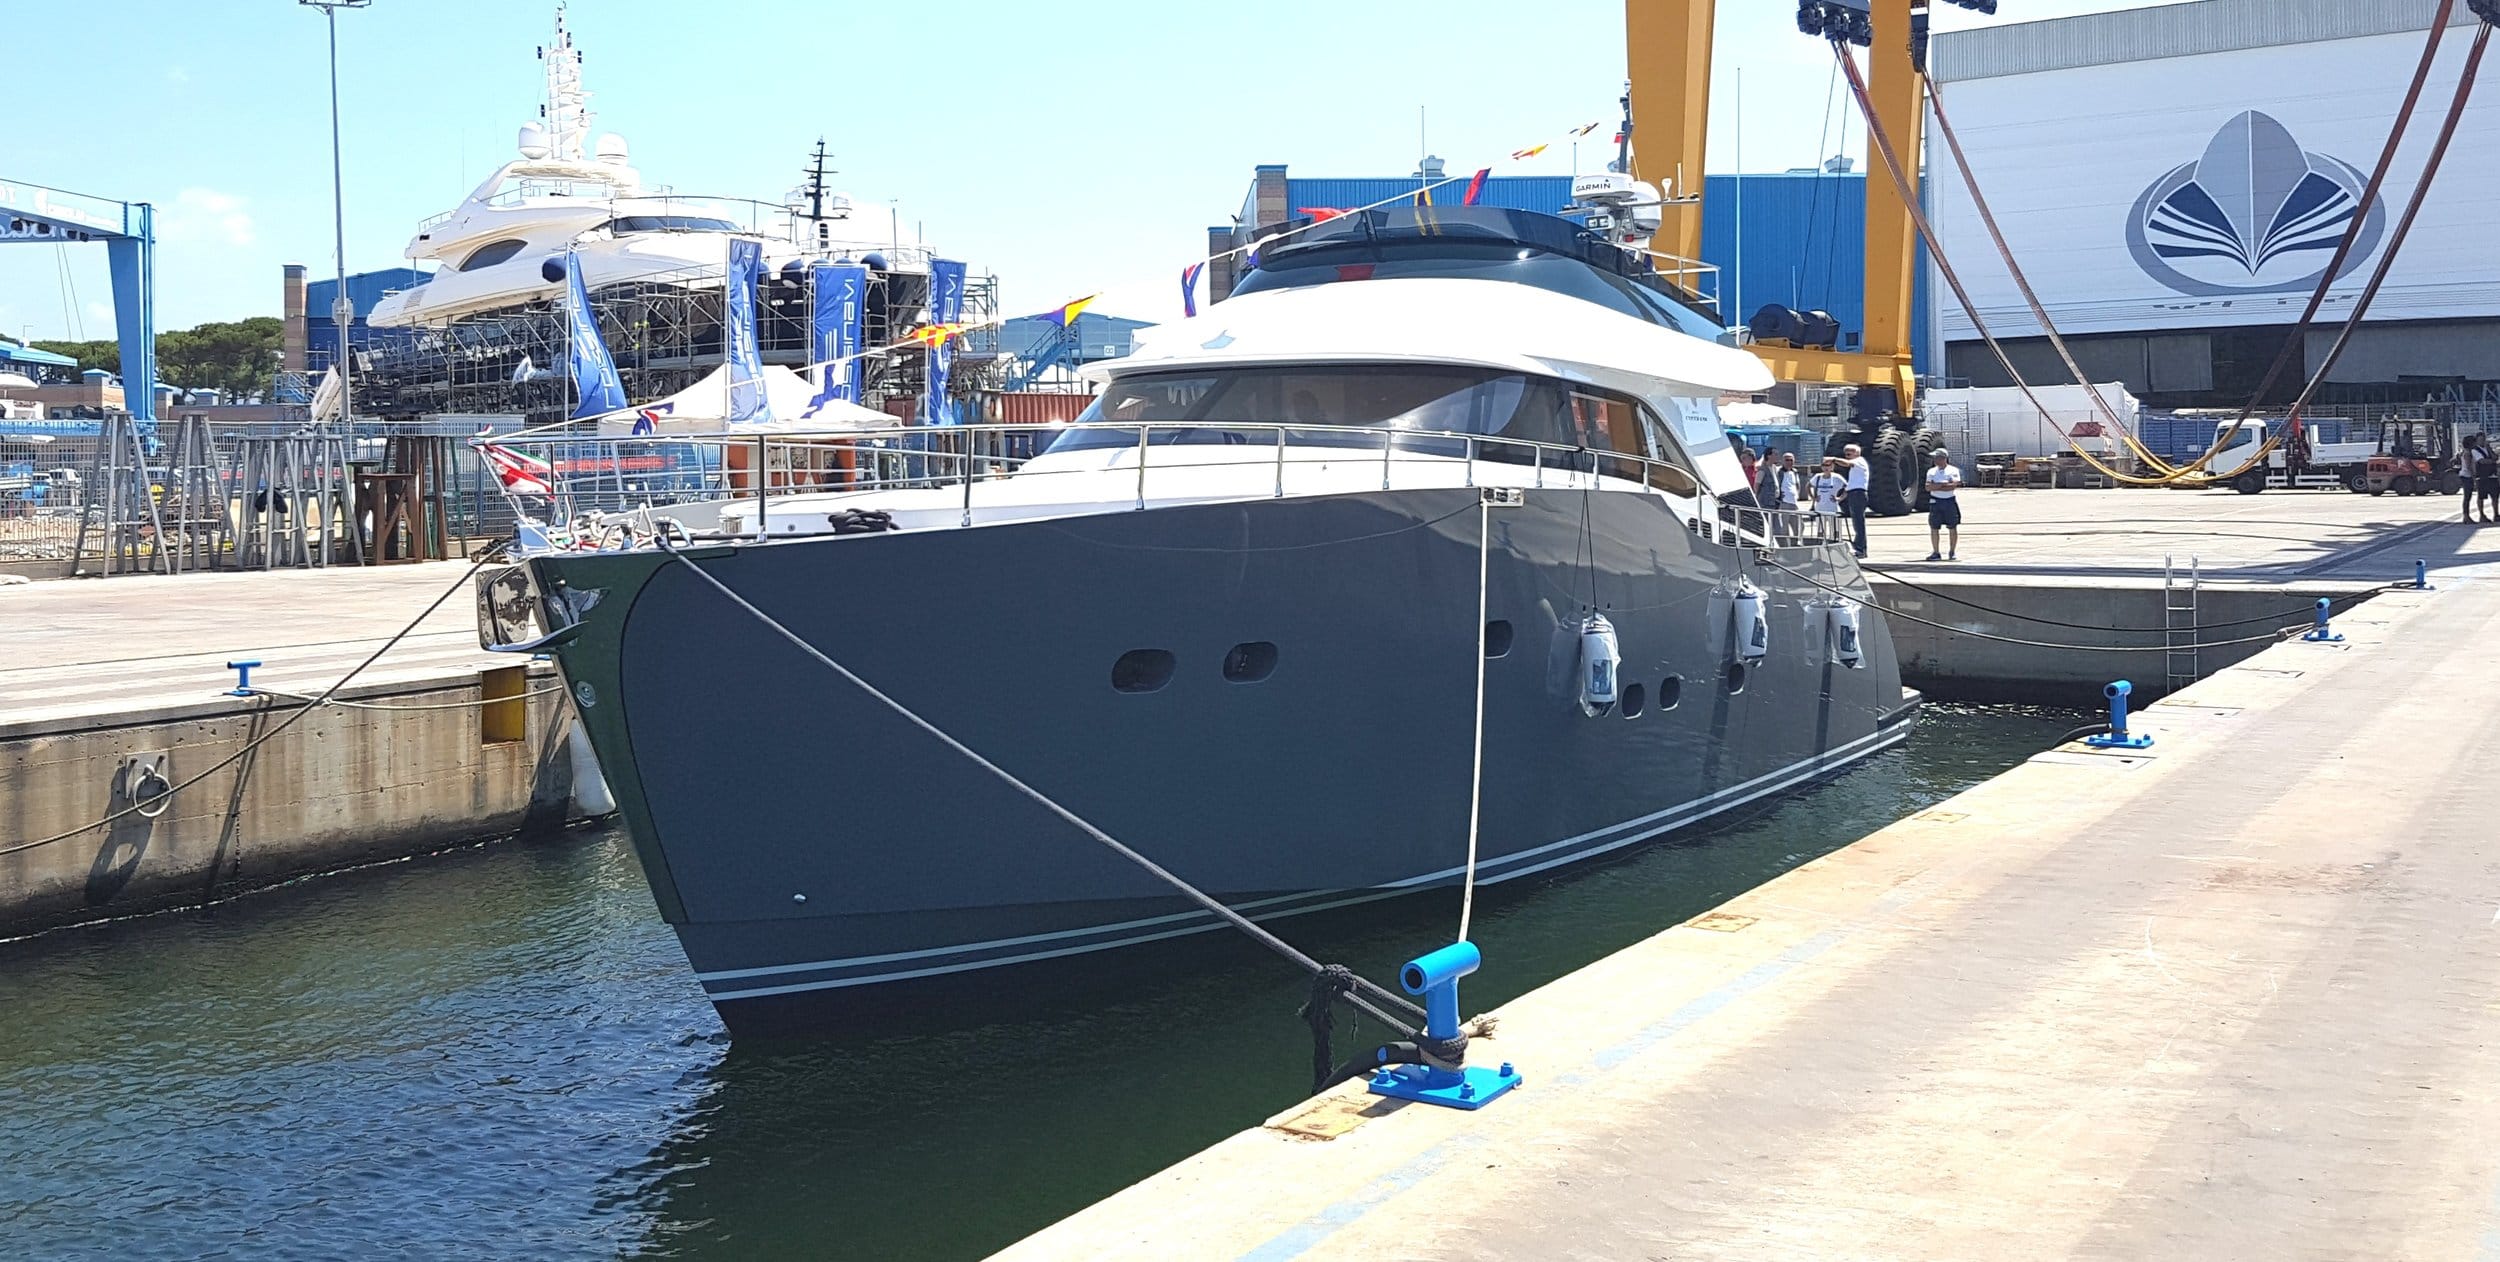 foto+prua-istante+1+yacht-general+arrangement-profile-sketch+architect-carignani-design-concept-luxury-boat-motor-4